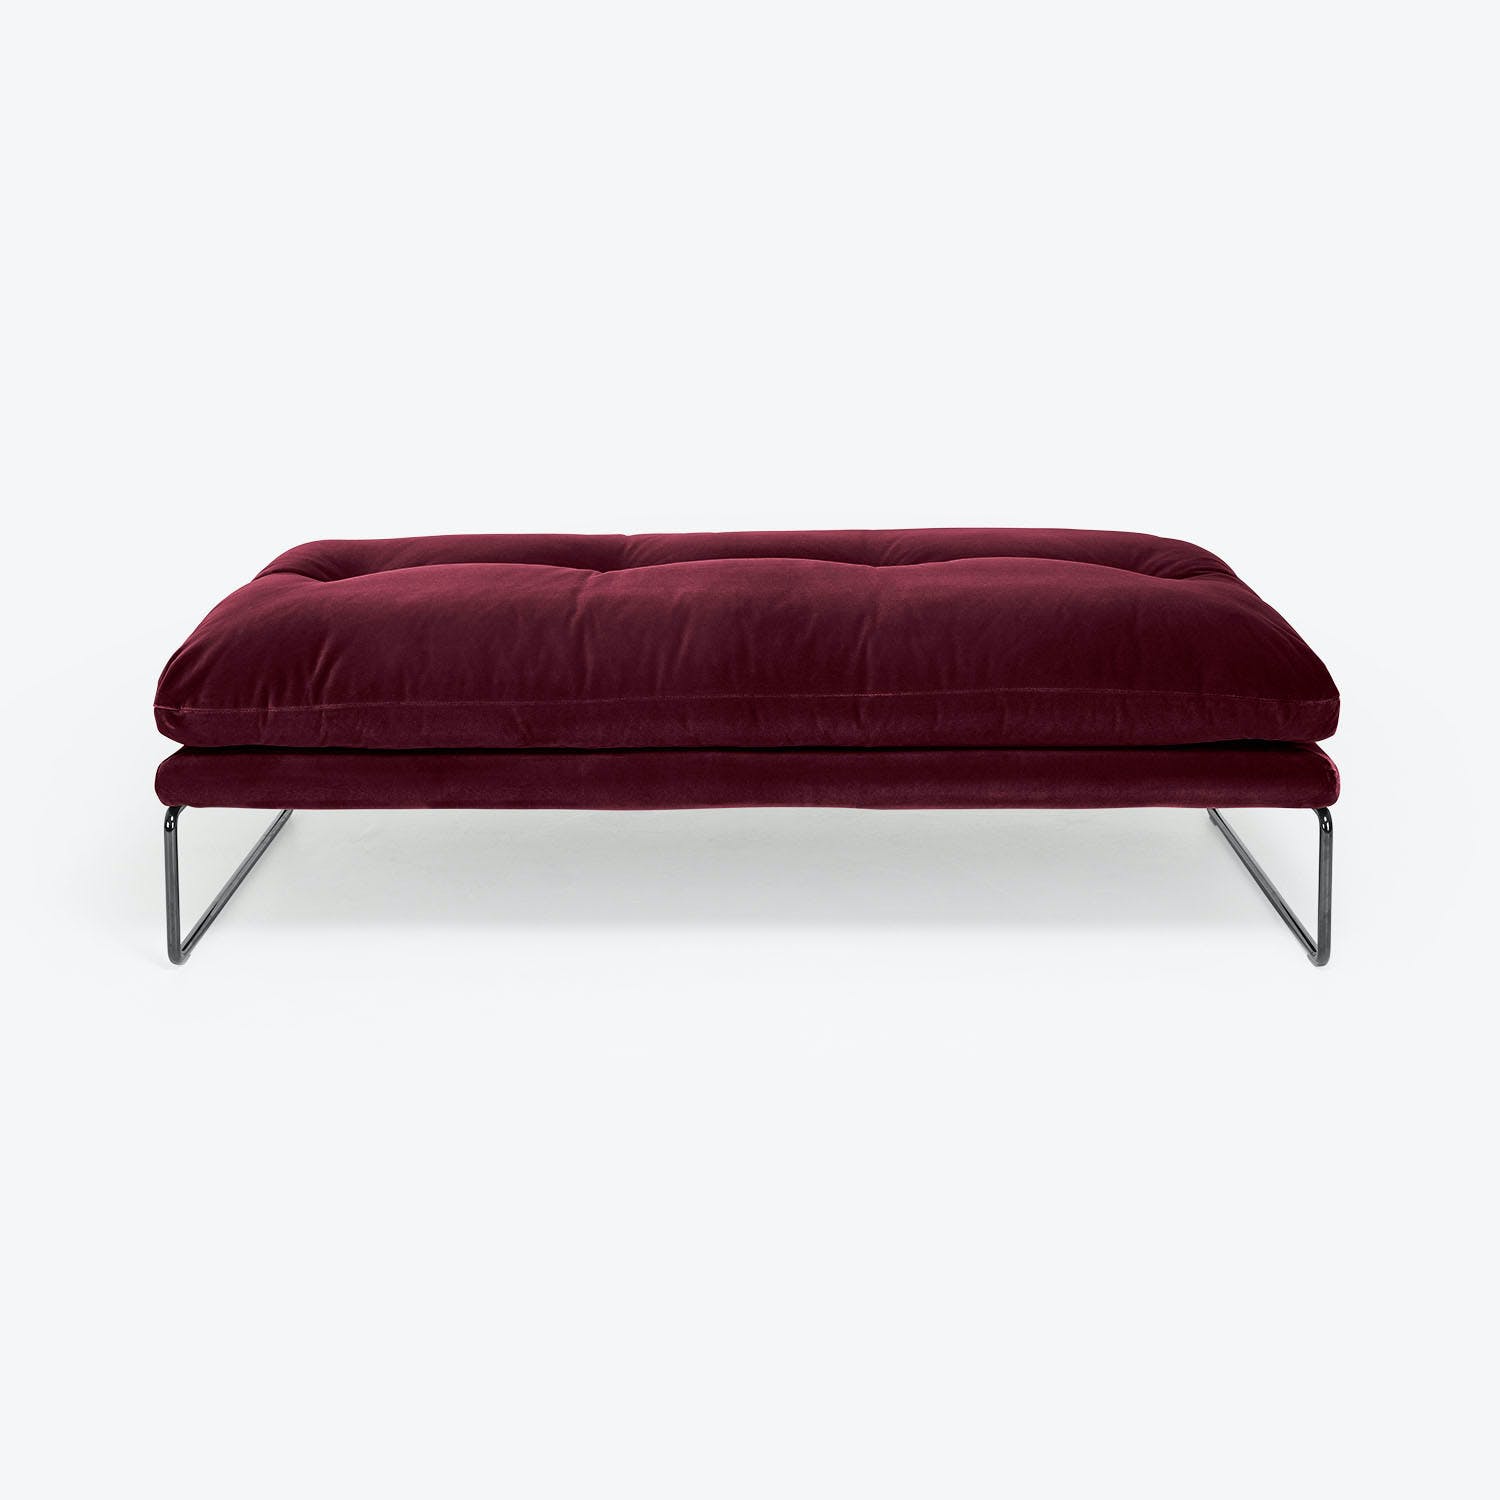 Contemporary burgundy ottoman with plush tufted cushion and sleek metal legs.